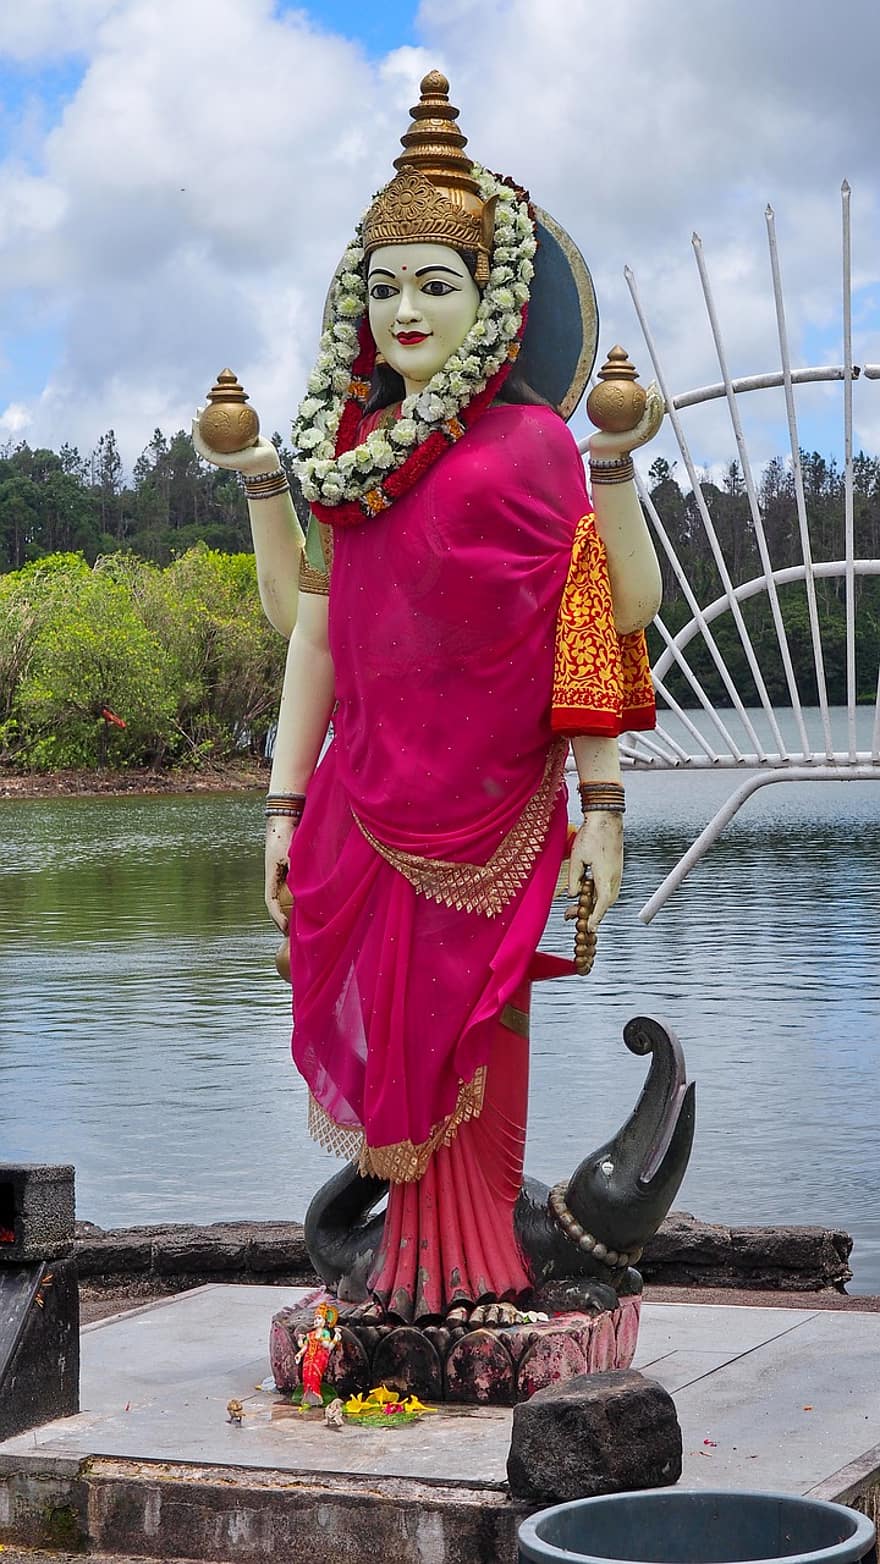 Statue, Riverbank, Figure, Culture, cultures, hinduism, religion, indigenous culture, women, spirituality, indian culture